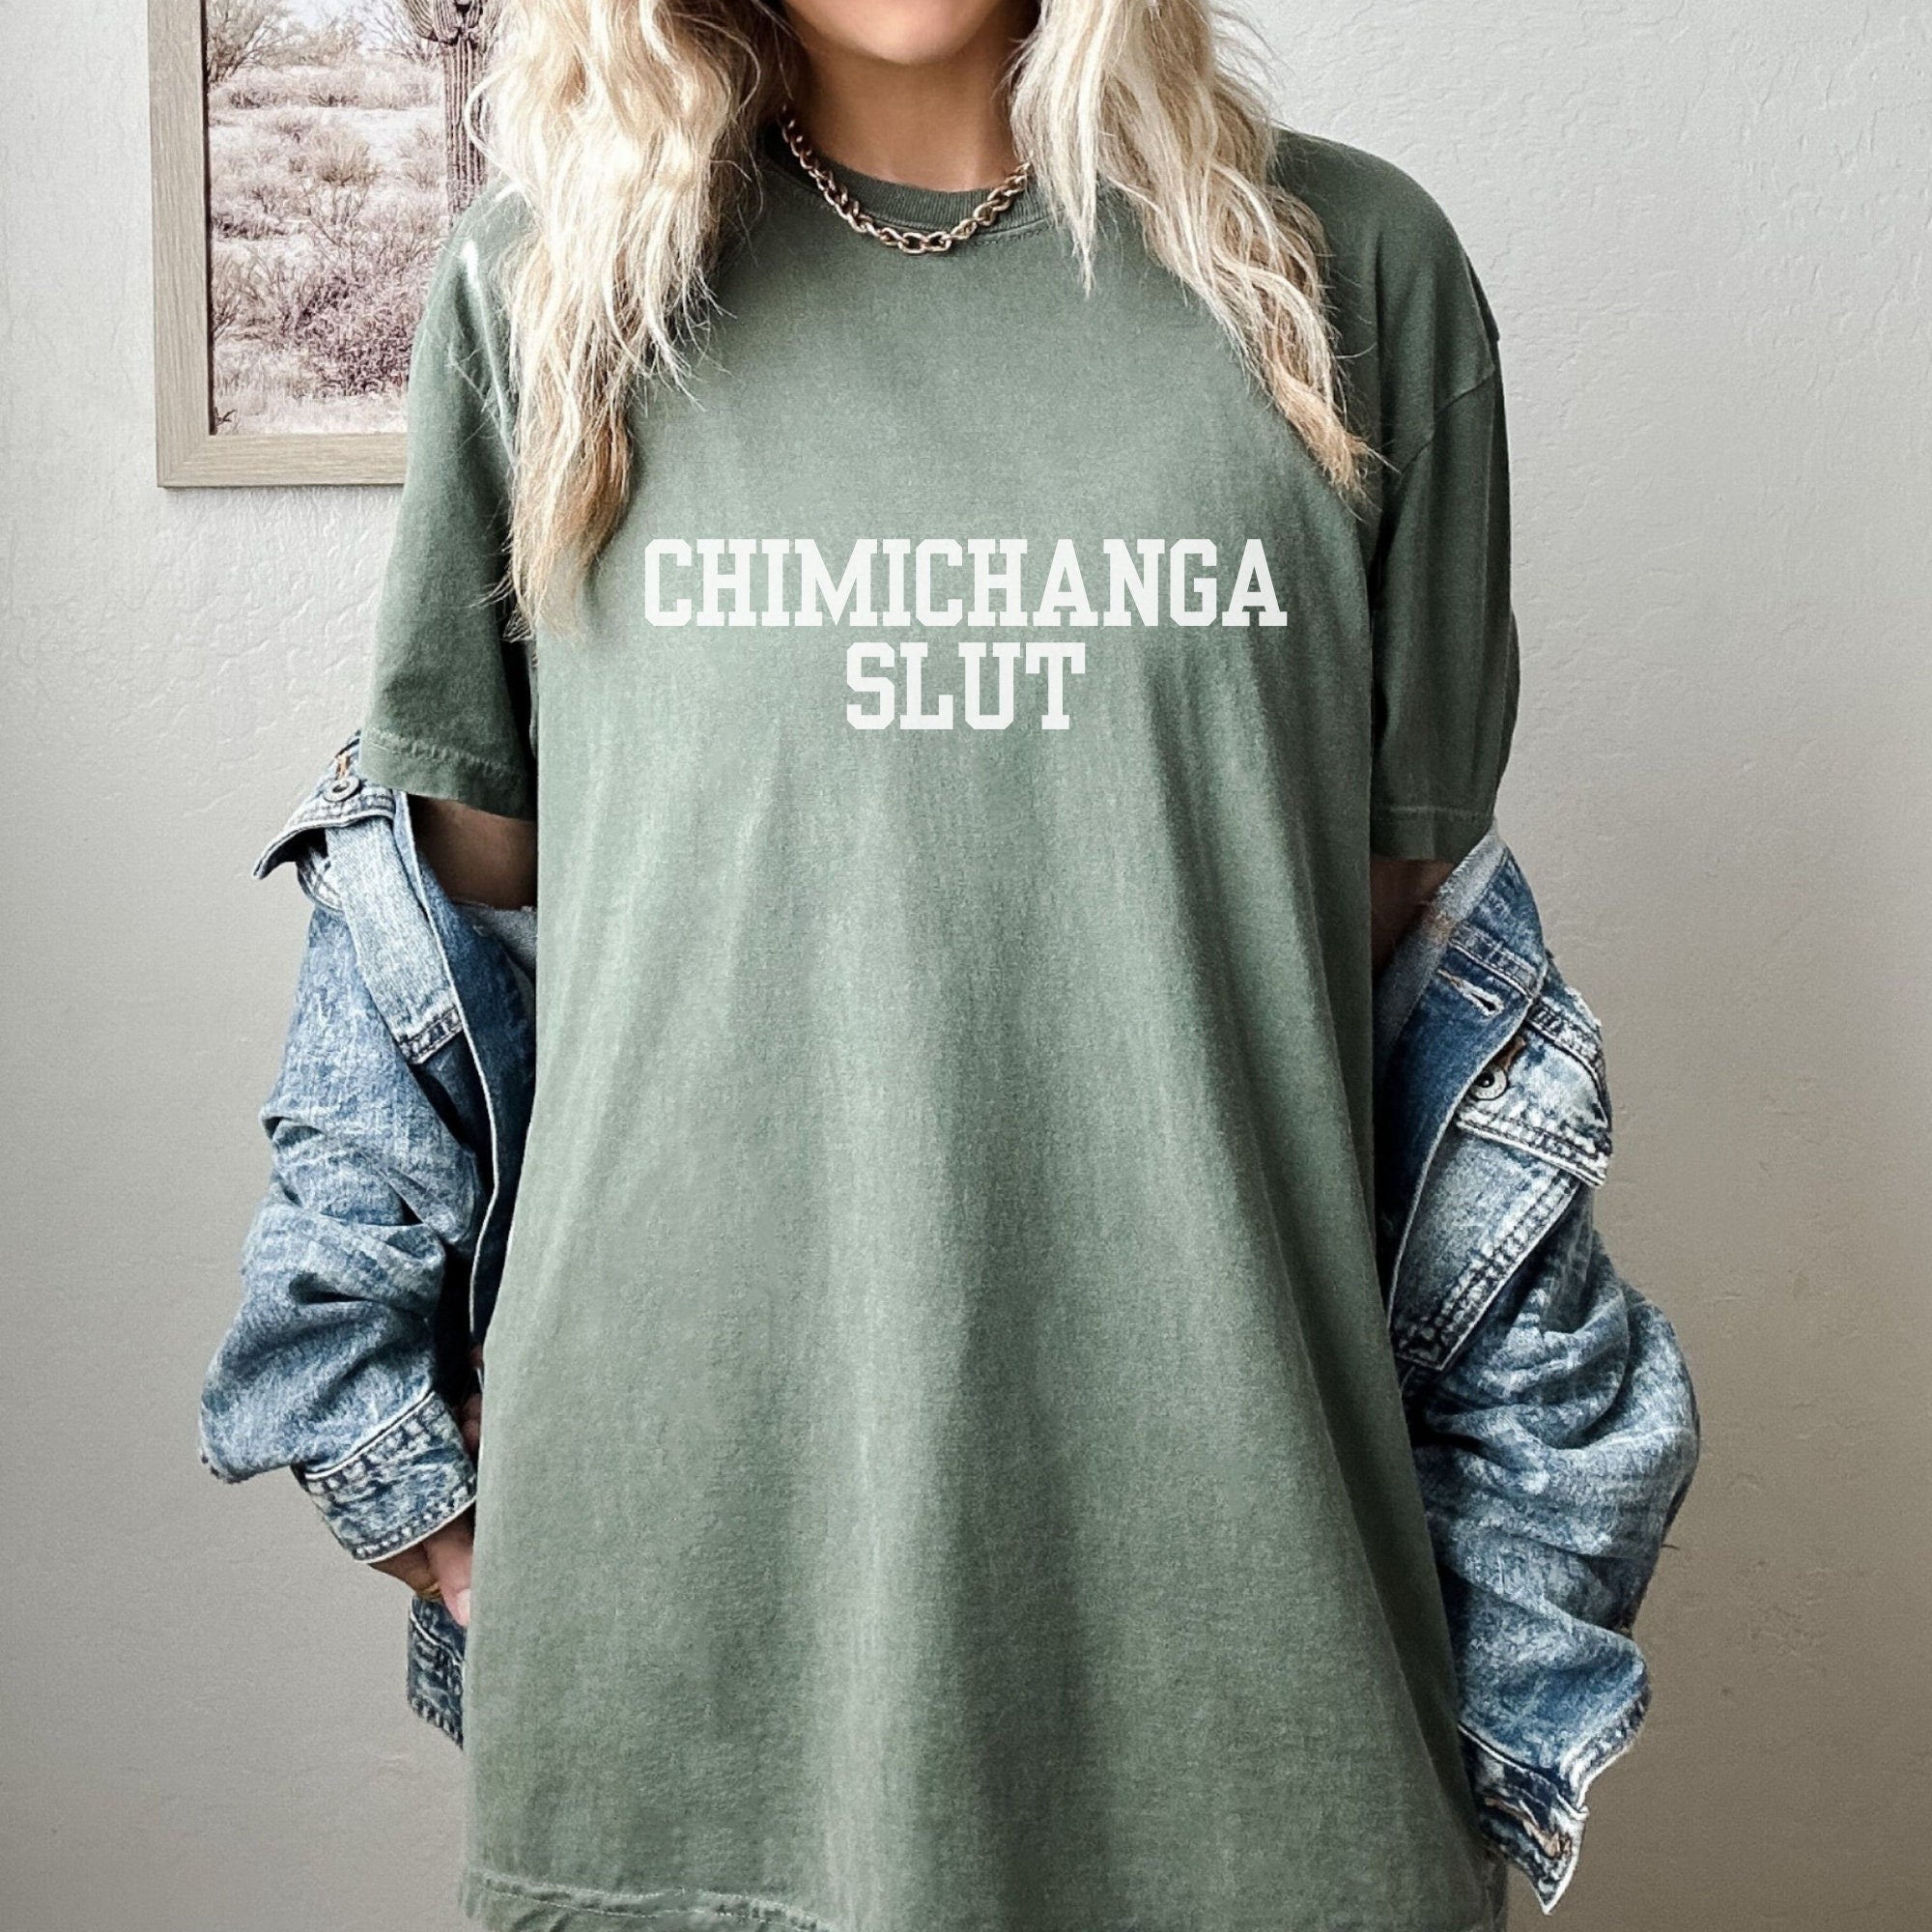 Chimichanga Slut Offensive Women's T-Shirt